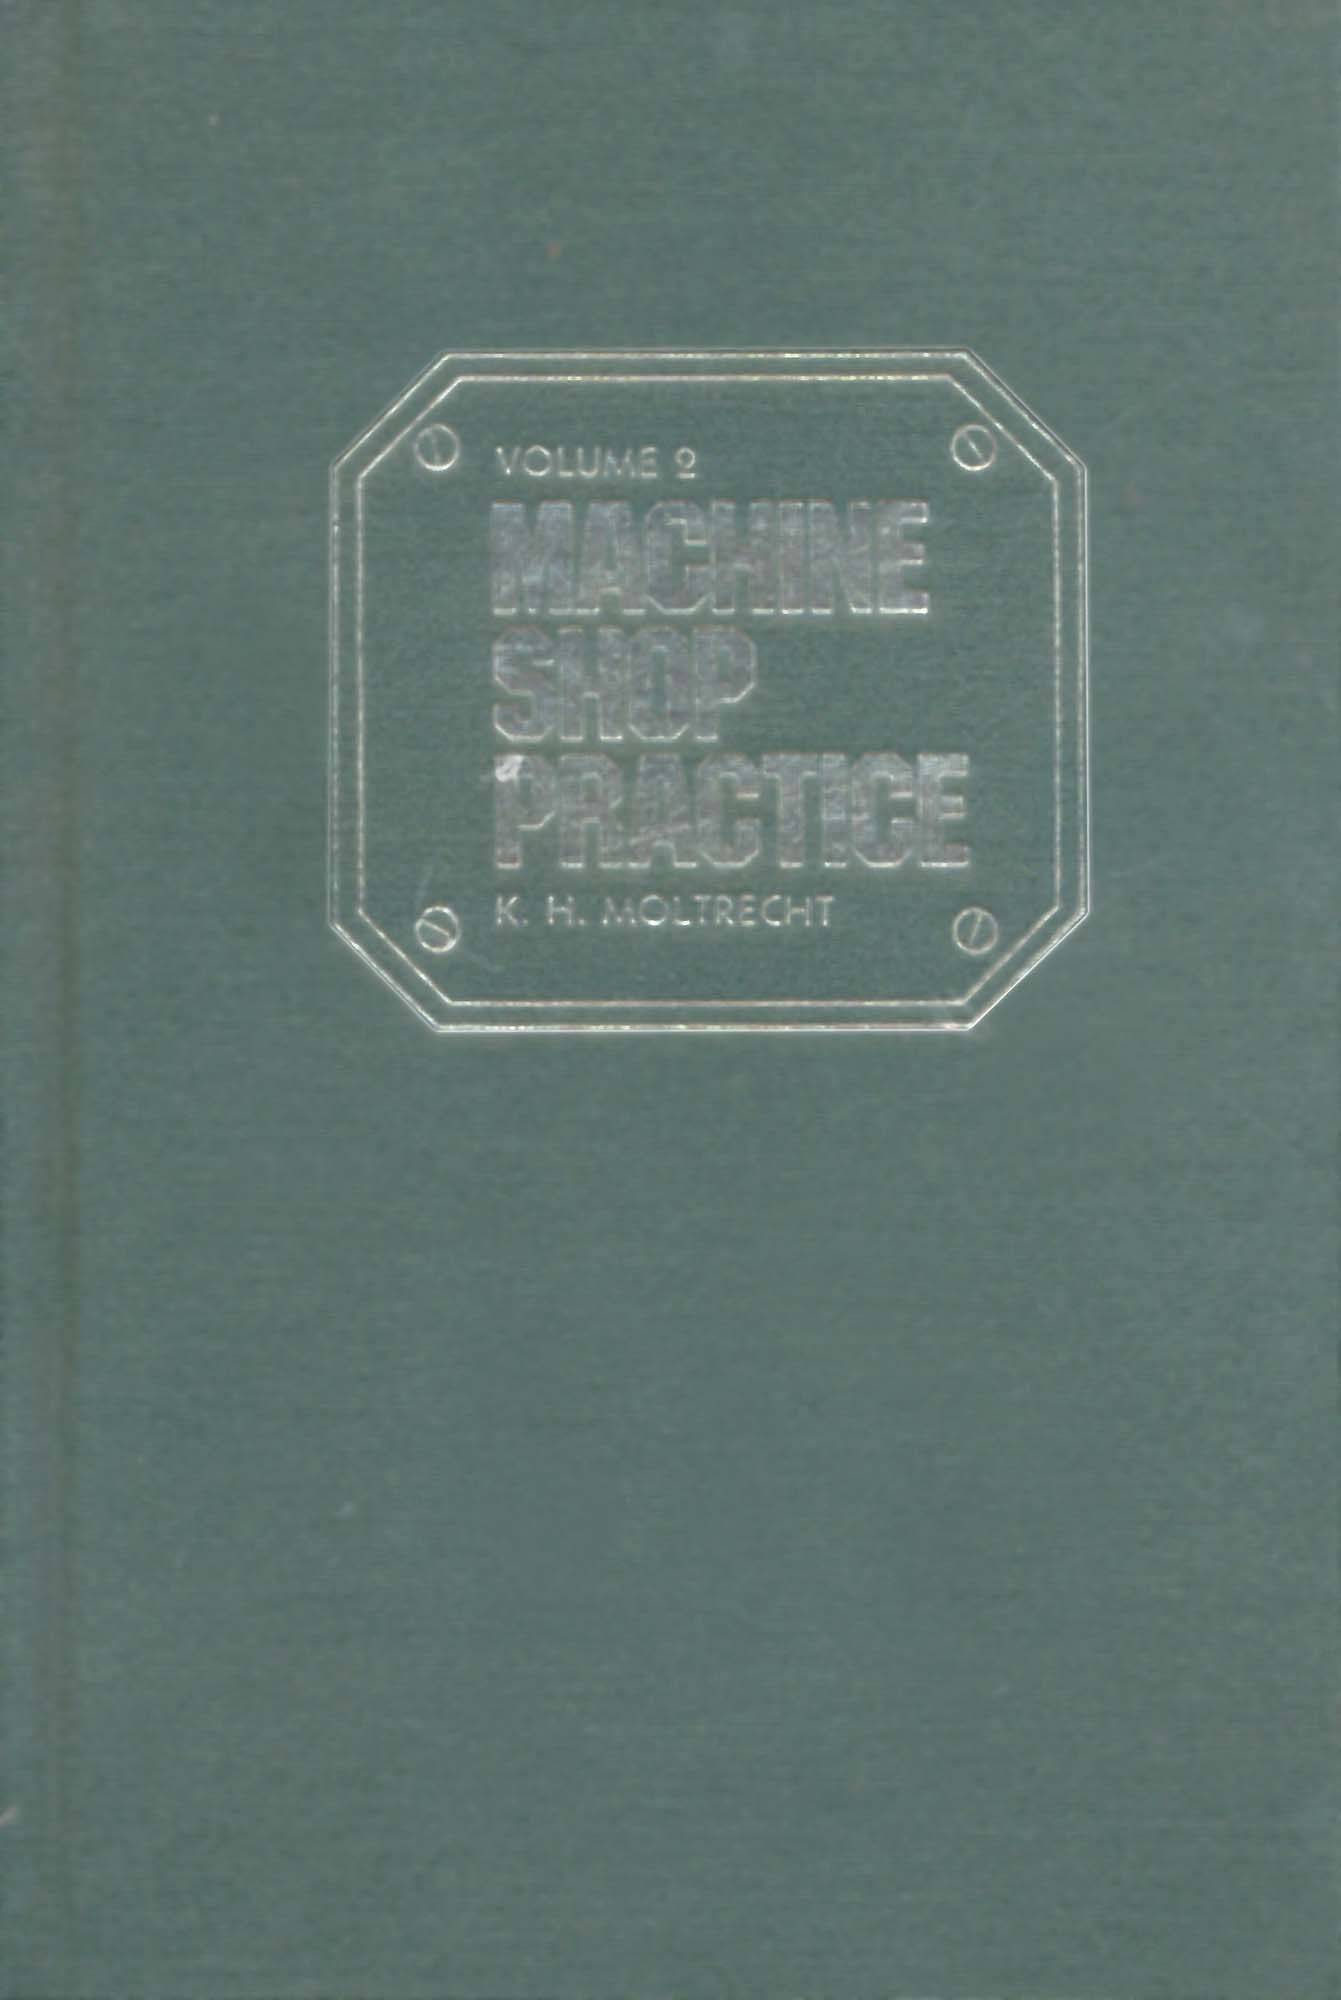 Book-Machine Shop Practice Volume 2